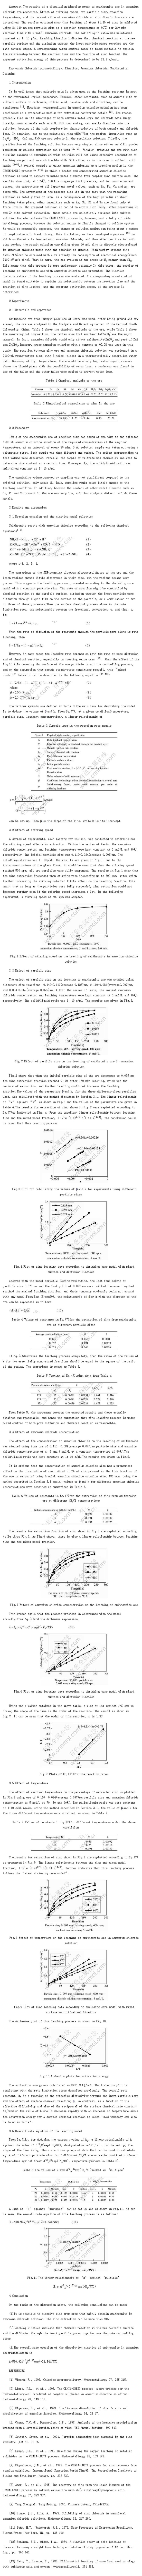 Dissolution kinetics of smithsonite ore in ammonium chloride solution